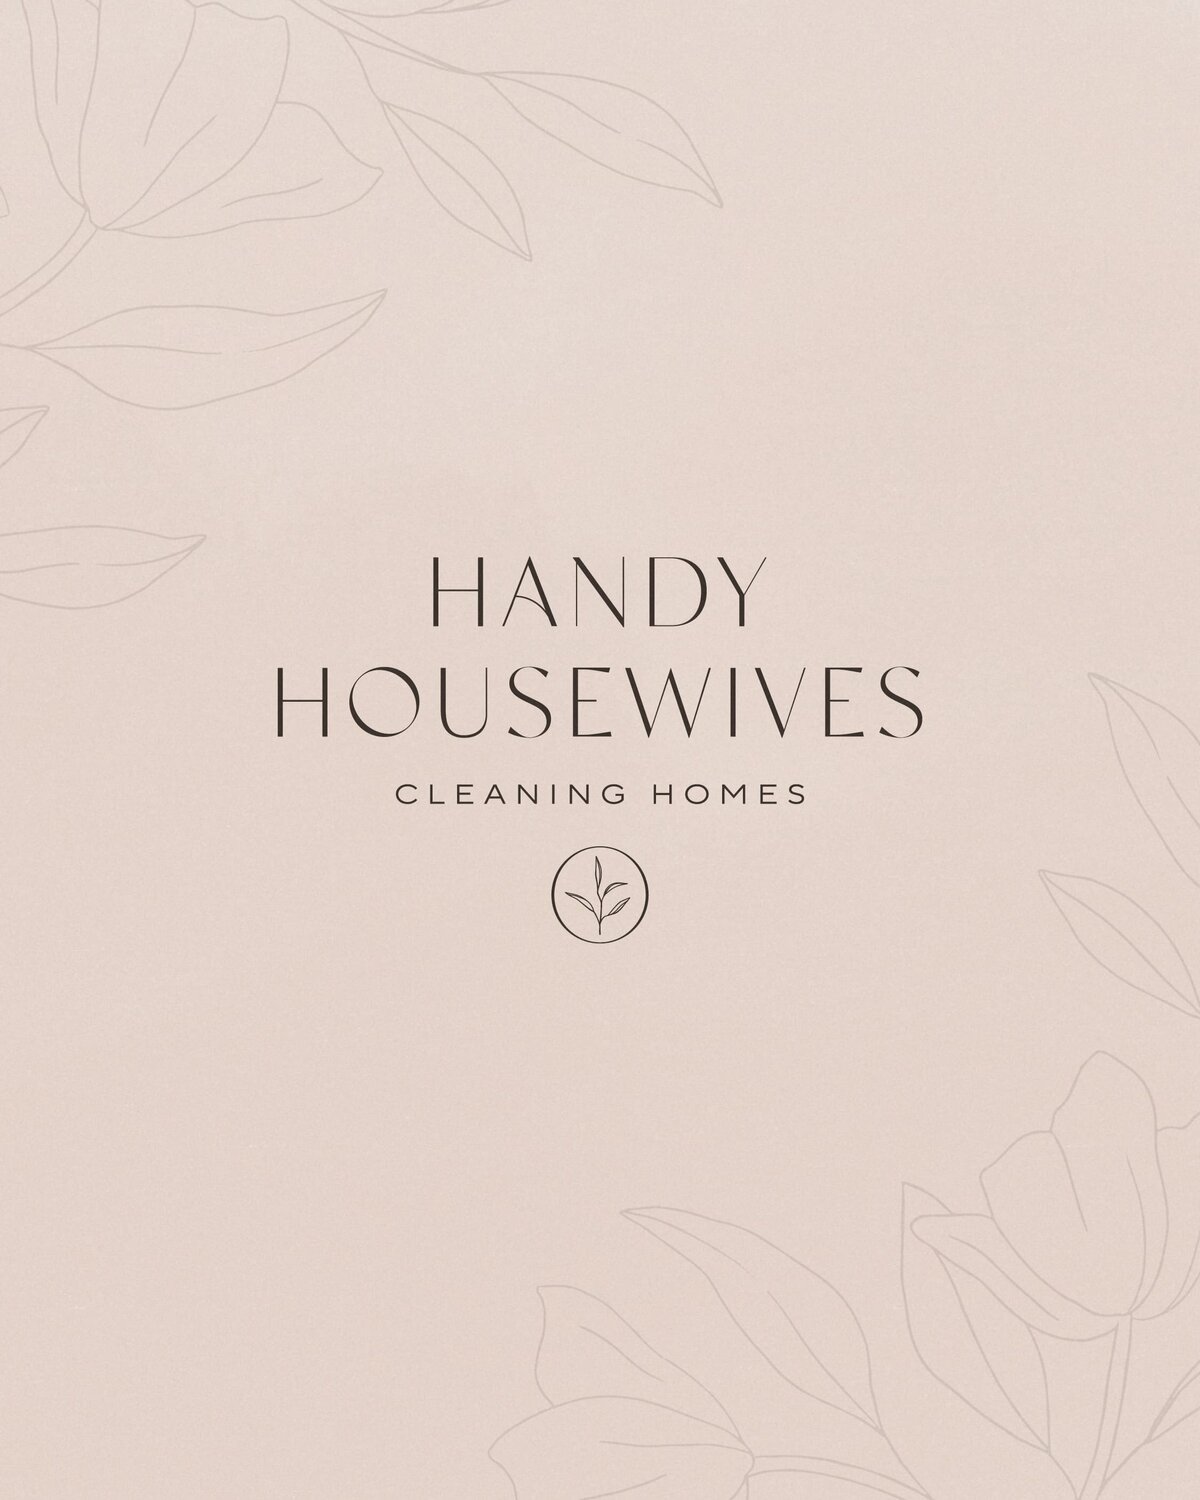 HandyHousewives_LaunchGraphics_Instagram10